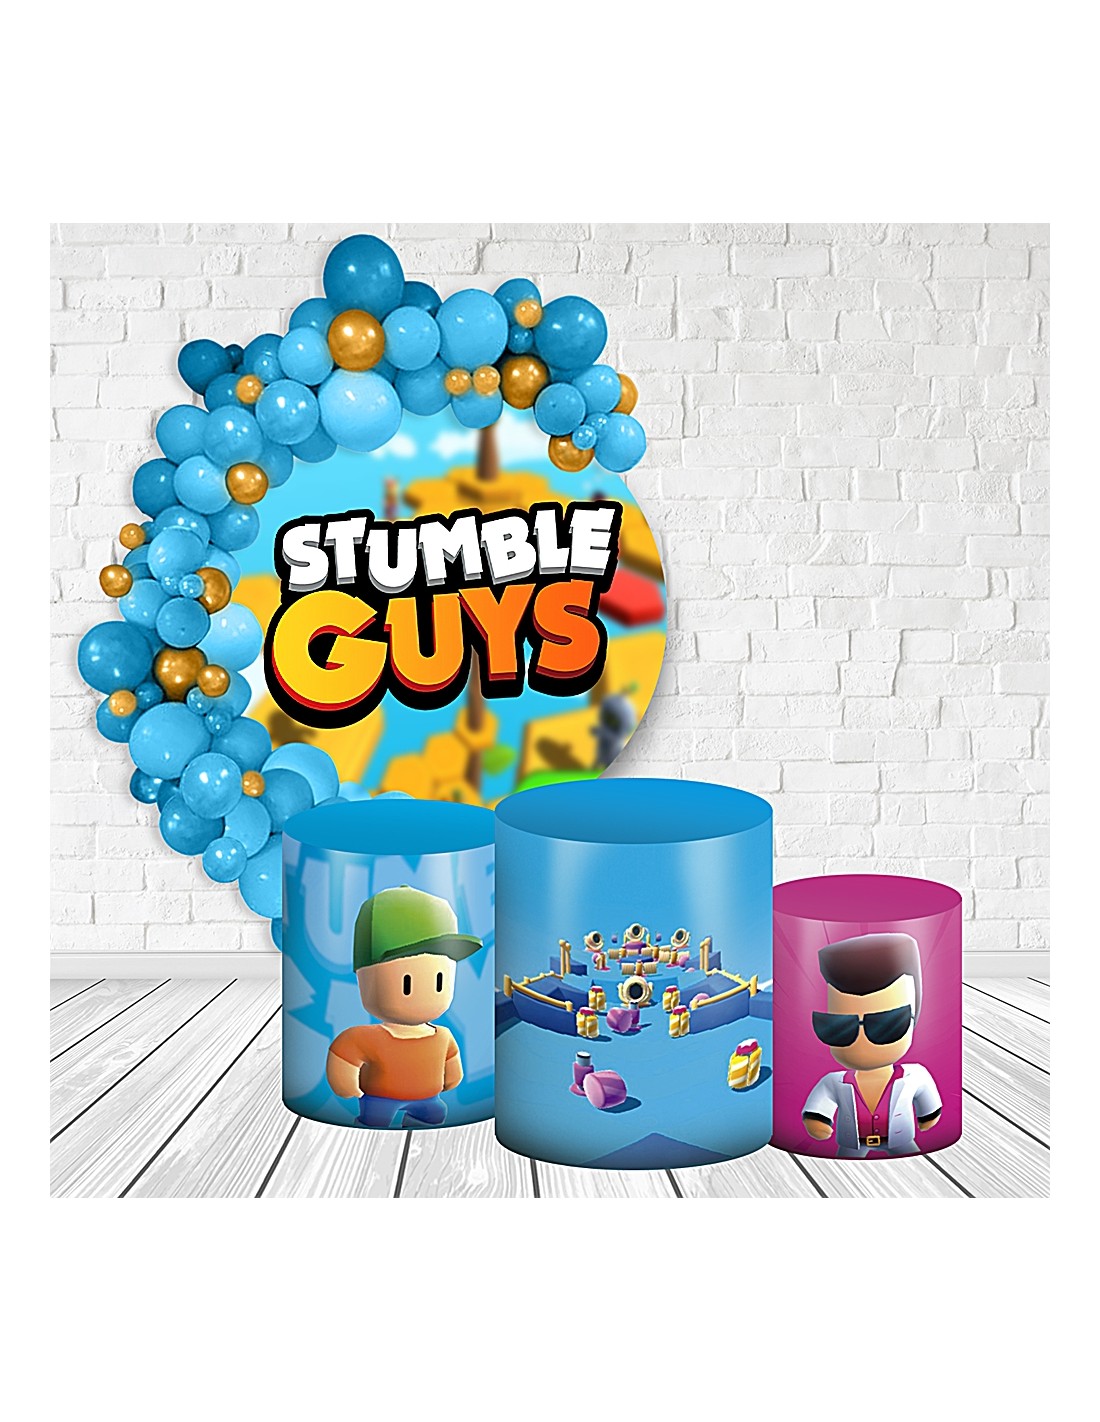 Stumble Guys - Como jogar com amigos?